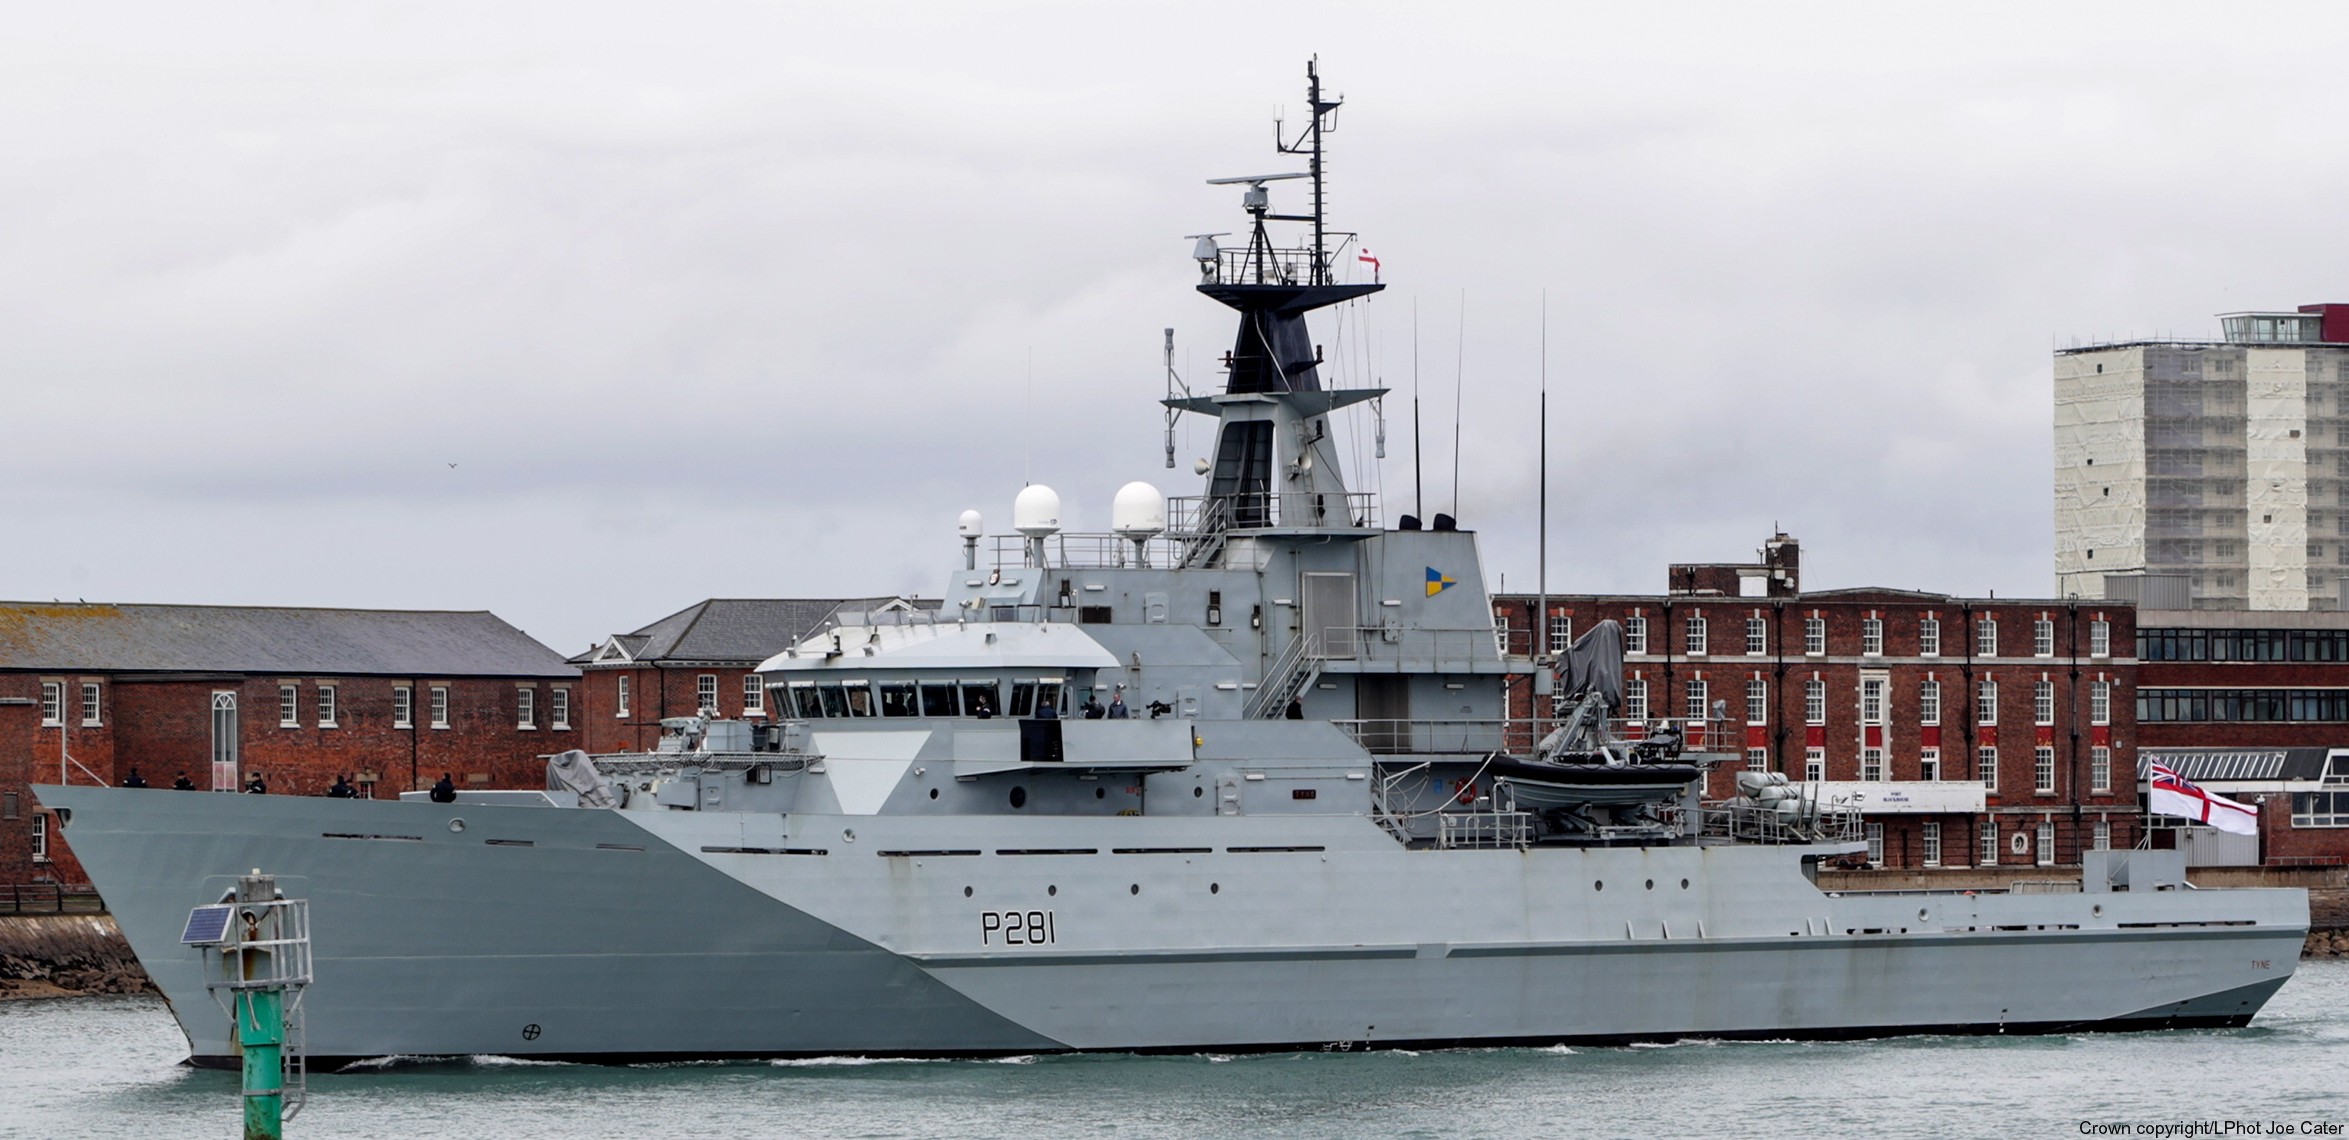 p281 hms tyne river class offshore patrol vessel opv royal navy 24